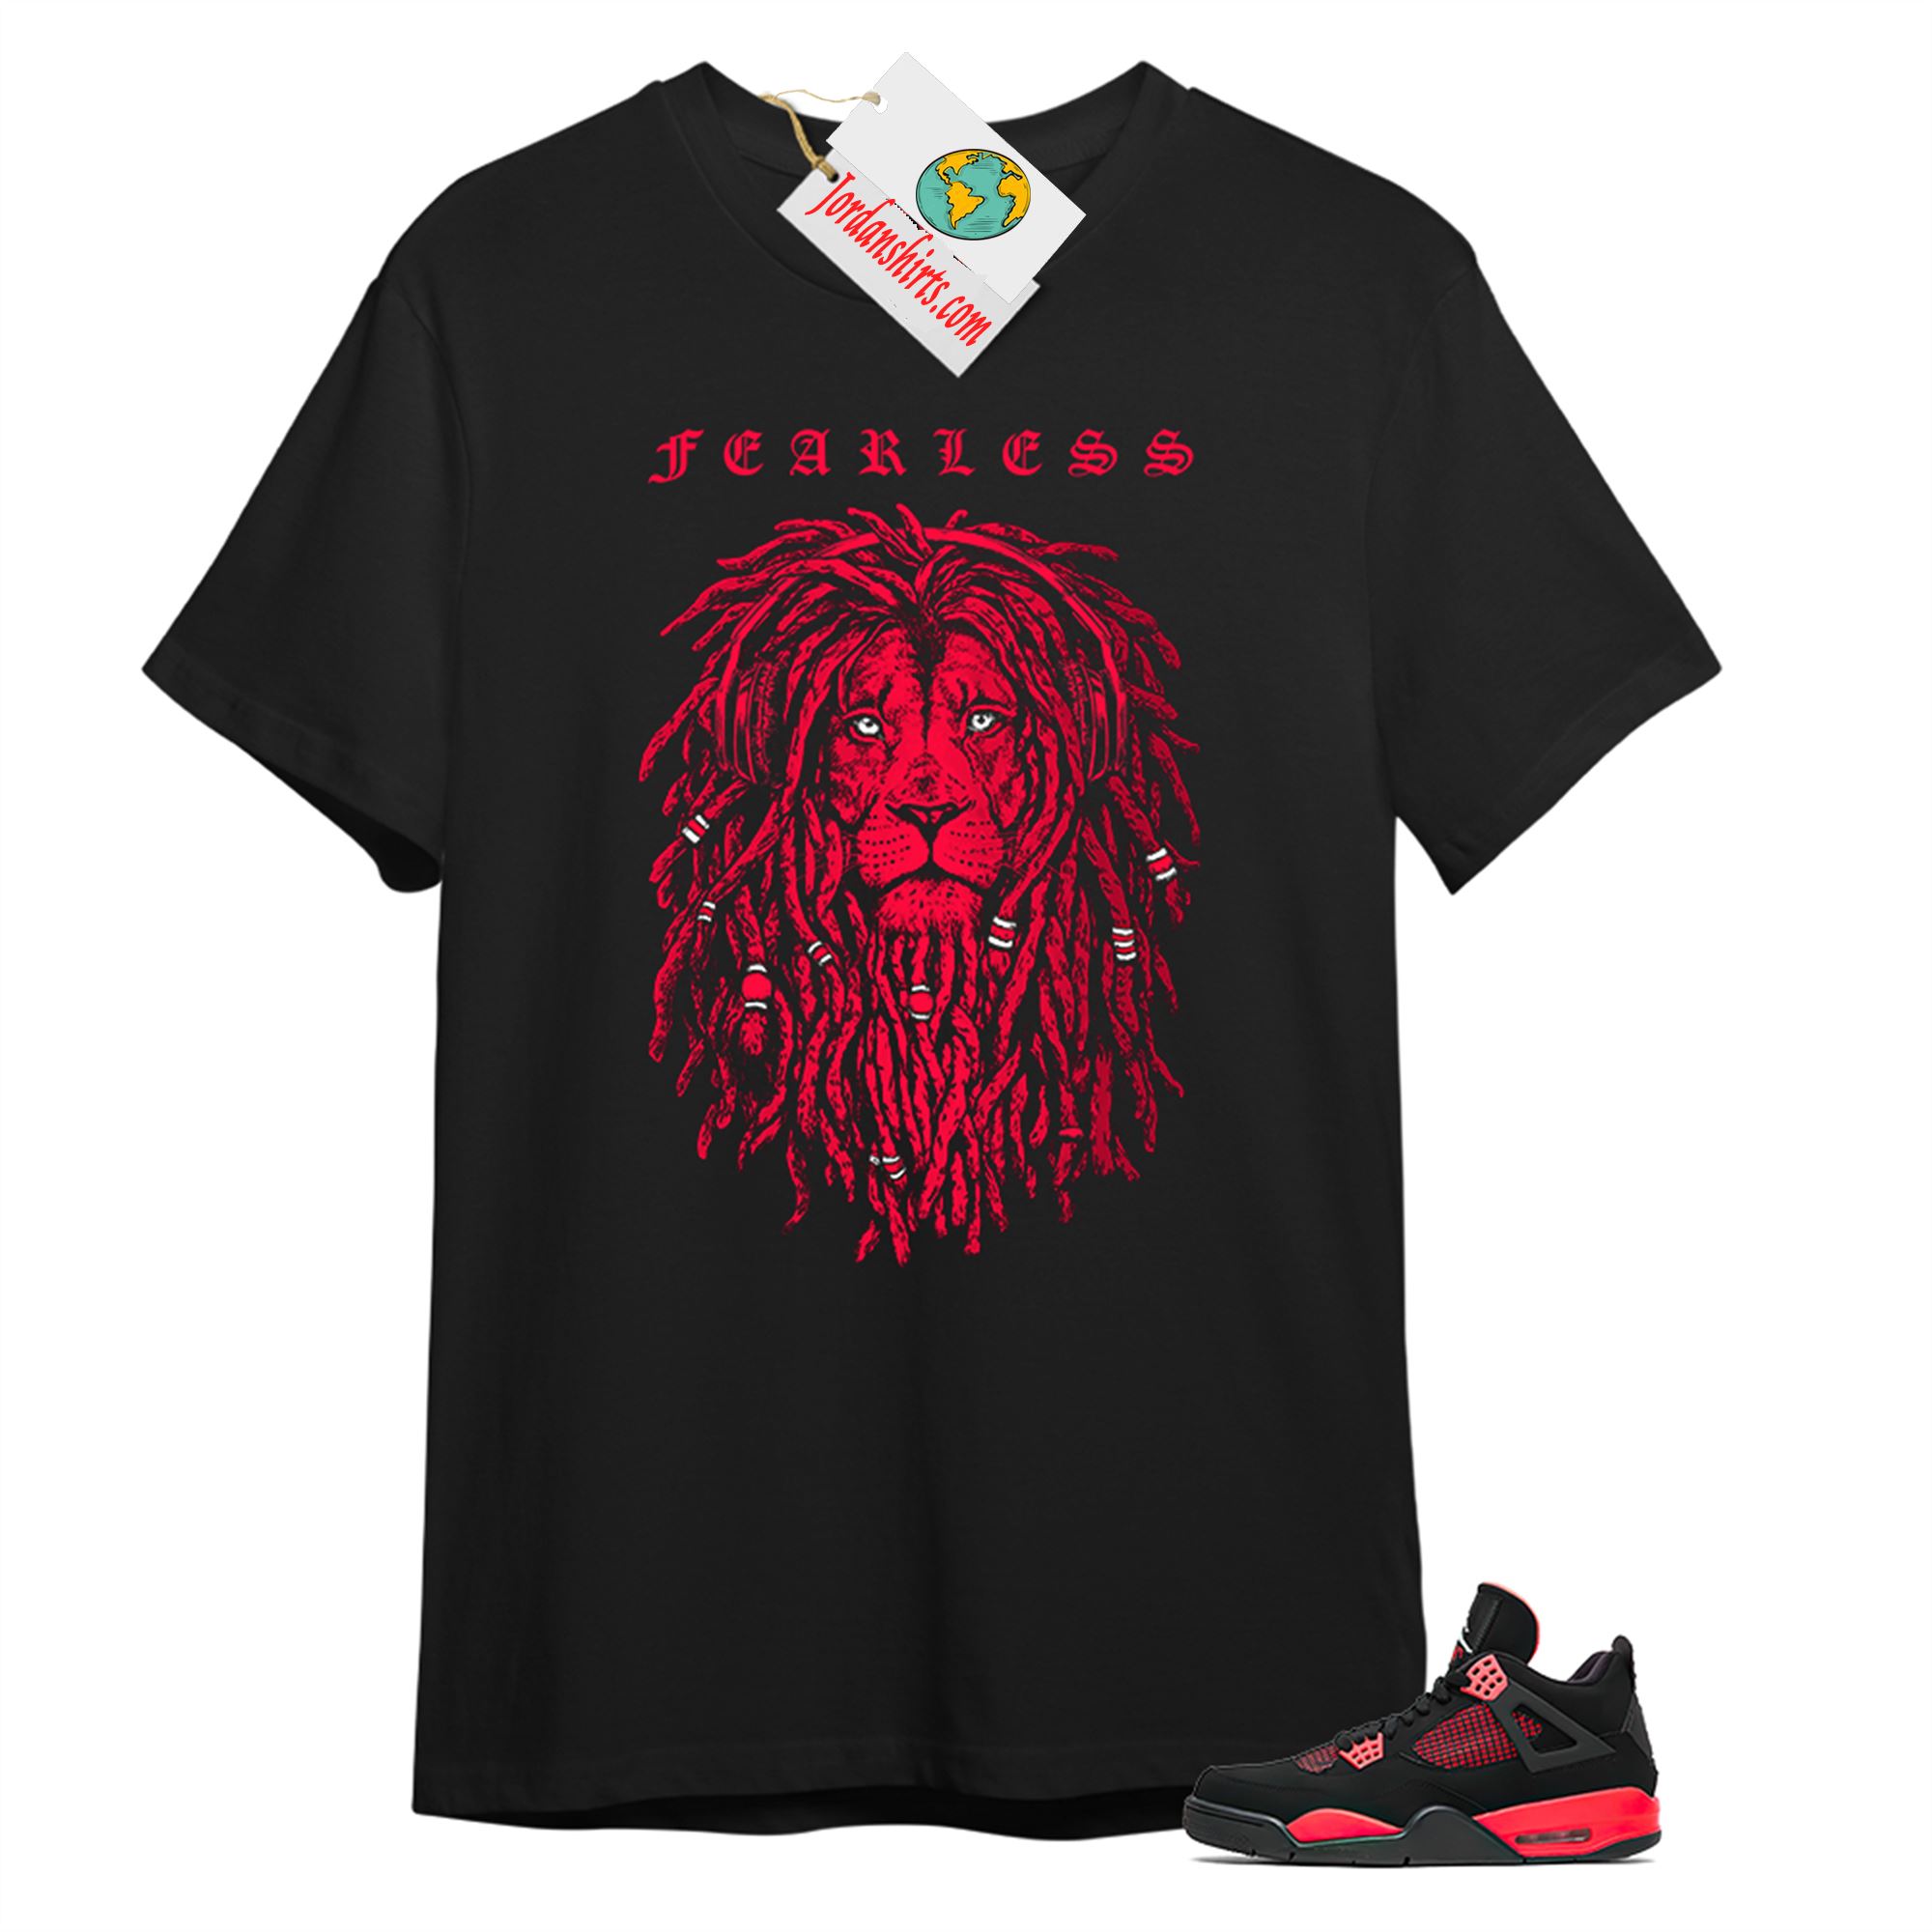 Jordan 4 Shirt, Fearless Lion Black T-shirt Air Jordan 4 Red Thunder 4s Plus Size Up To 5xl